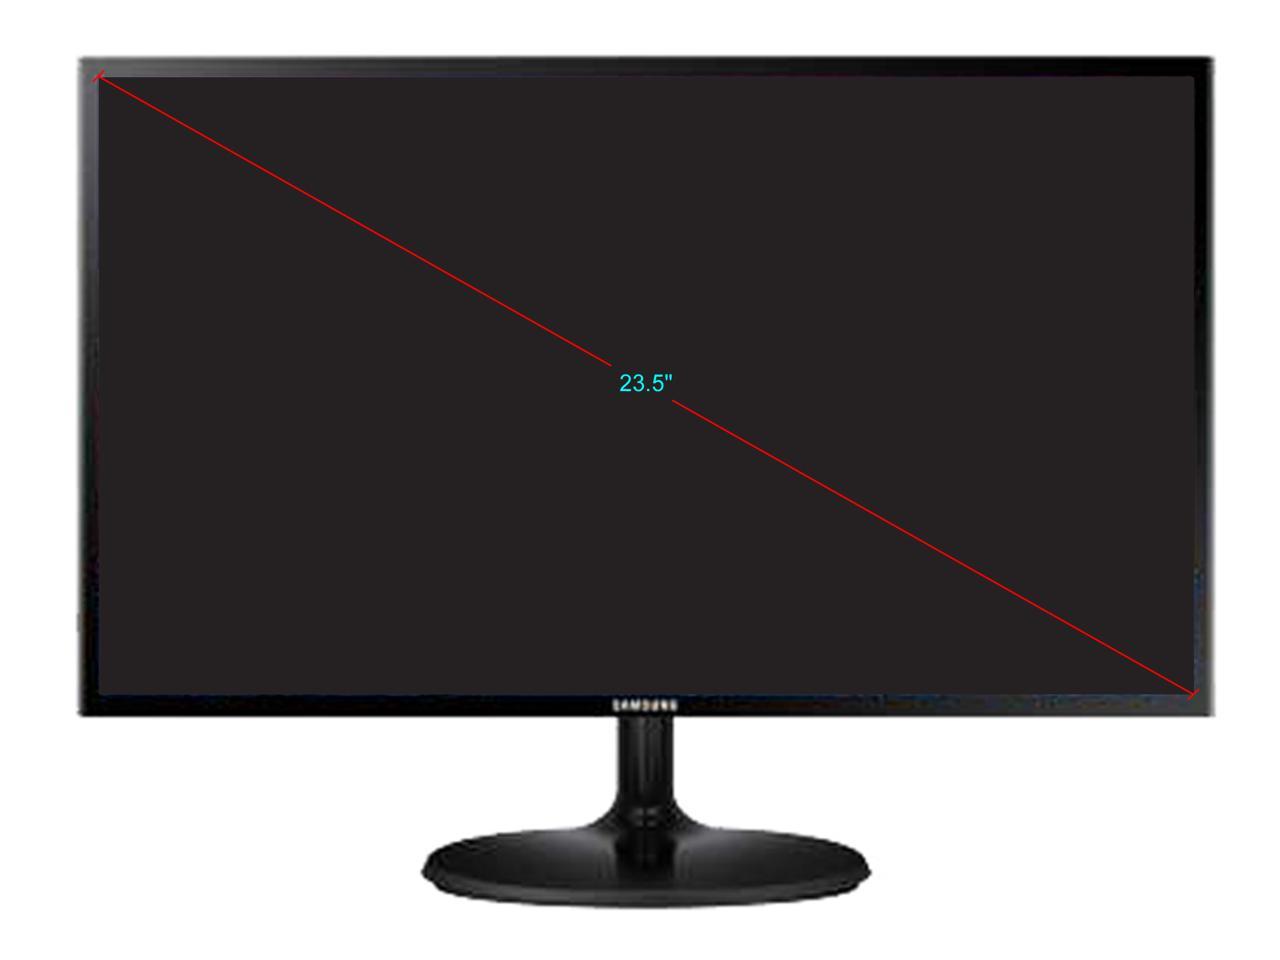 SAMSUNG S24F354 24" (Actual size 23.5") Full HD 1920 x 1080 4ms (GTG) VGA HDMI AMD FreeSync Flicker Free Technology Super Slim Design LED Backlit Gaming Monitor